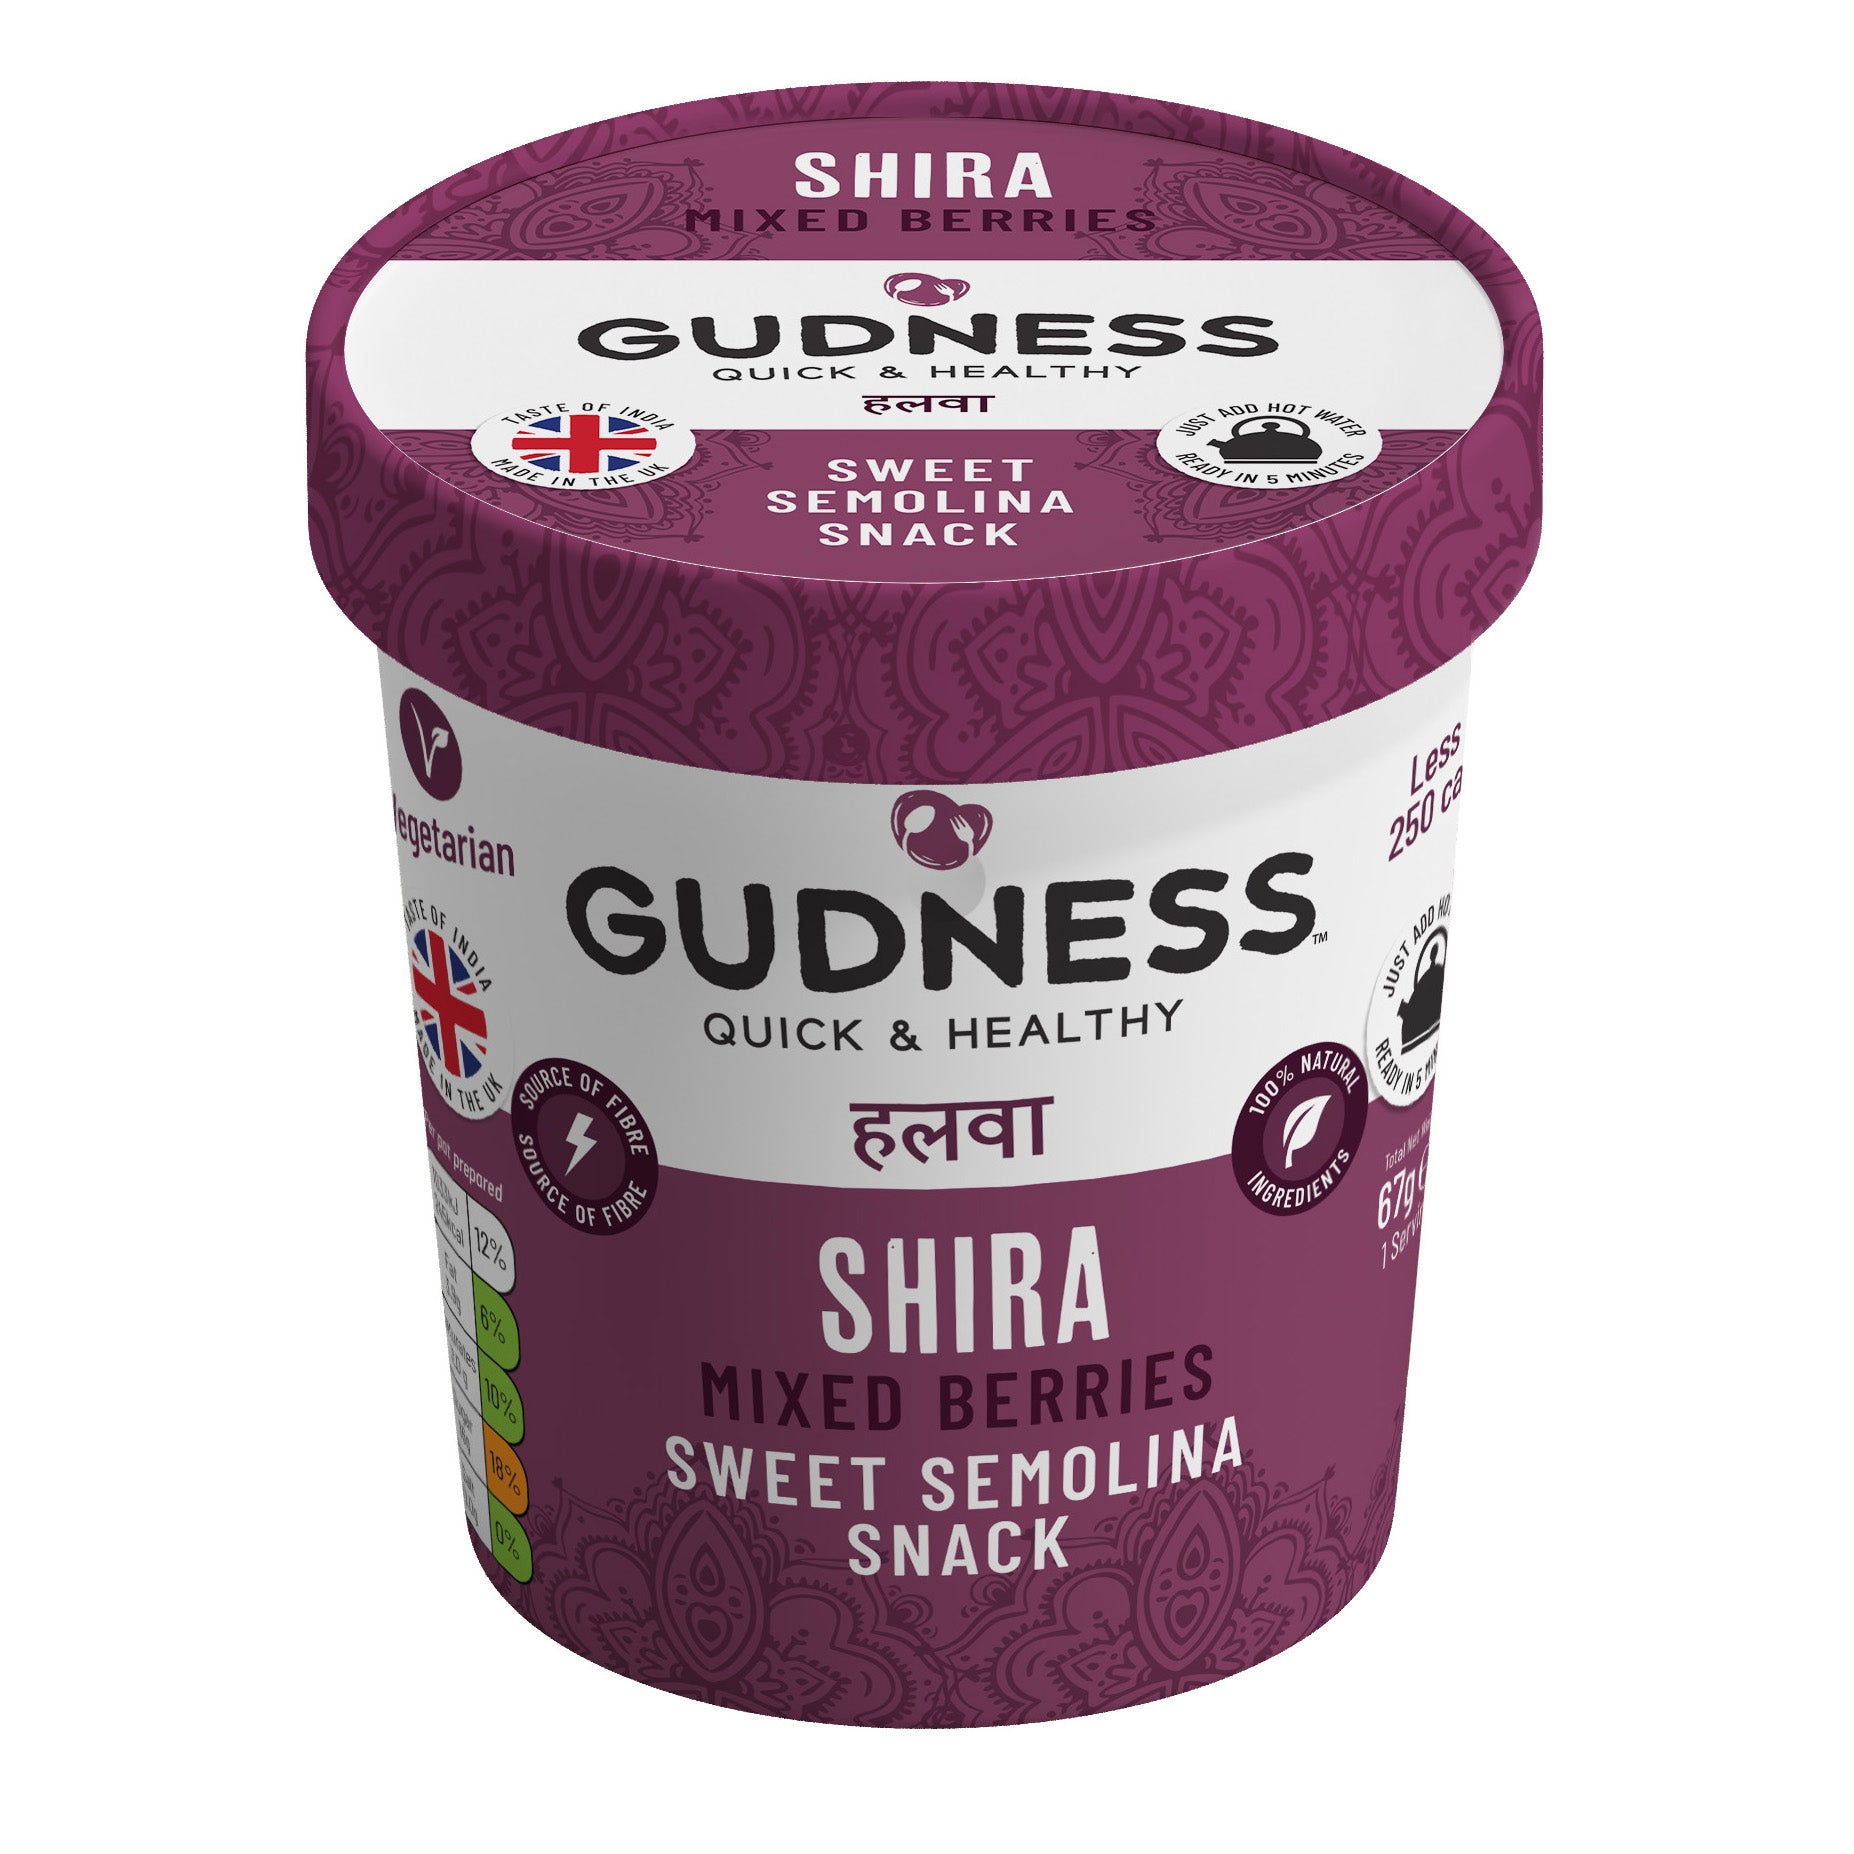 Shira Mixed Beerries Sweet Semoilina Snack